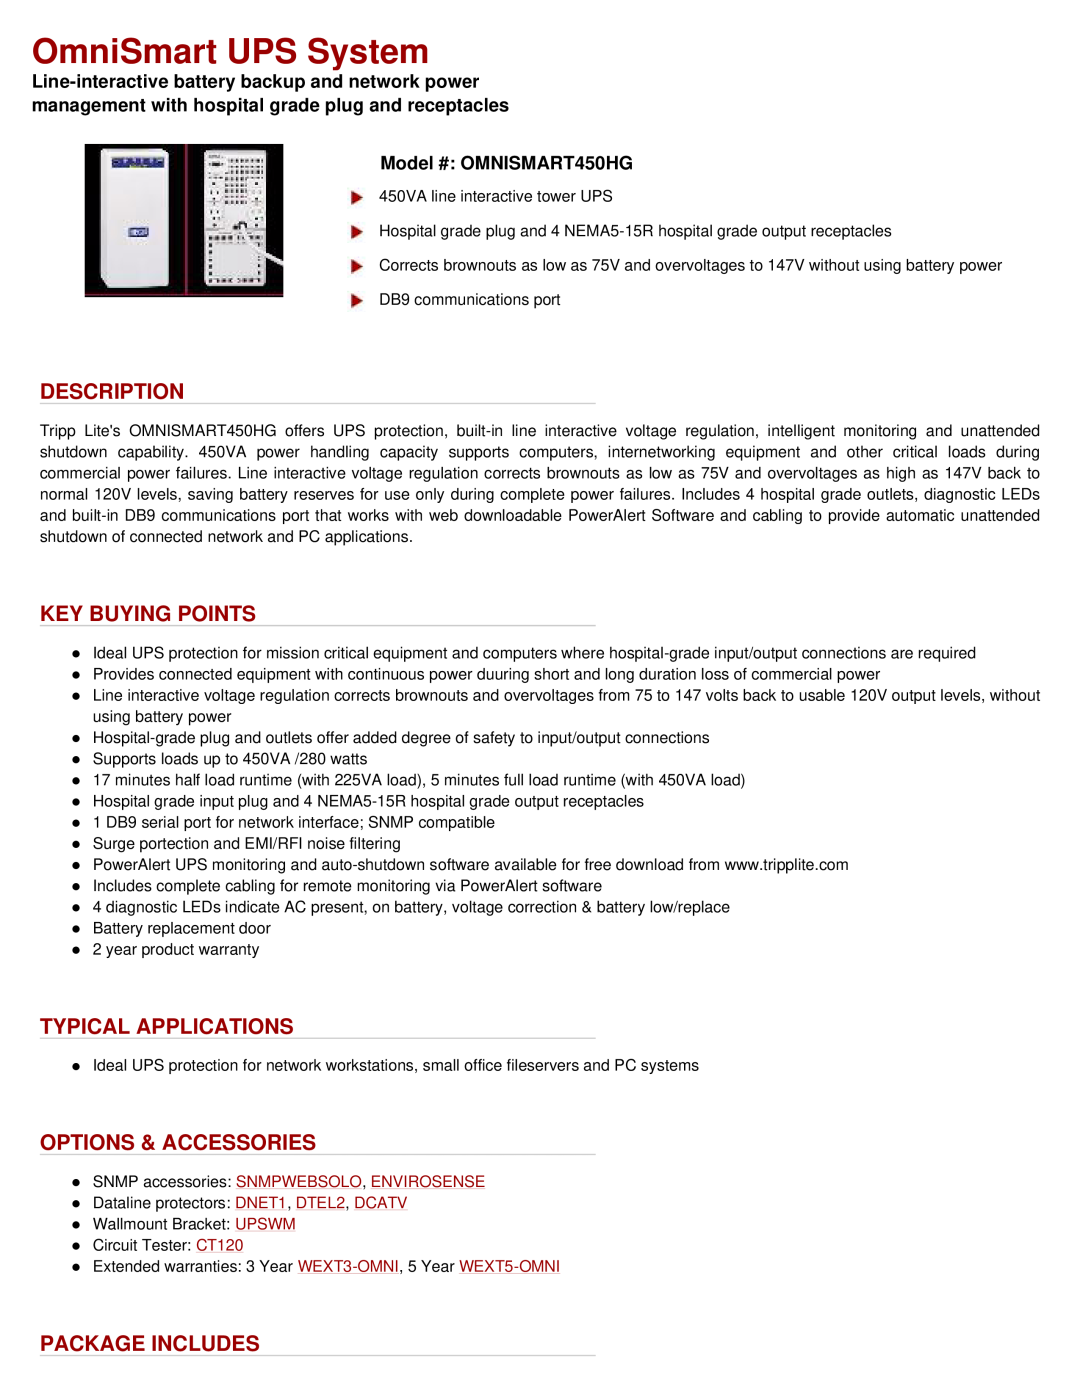 Tripp Lite OMNISMART450HG warranty Description, Key Buying Points, Typical Applications, Options & Accessories 